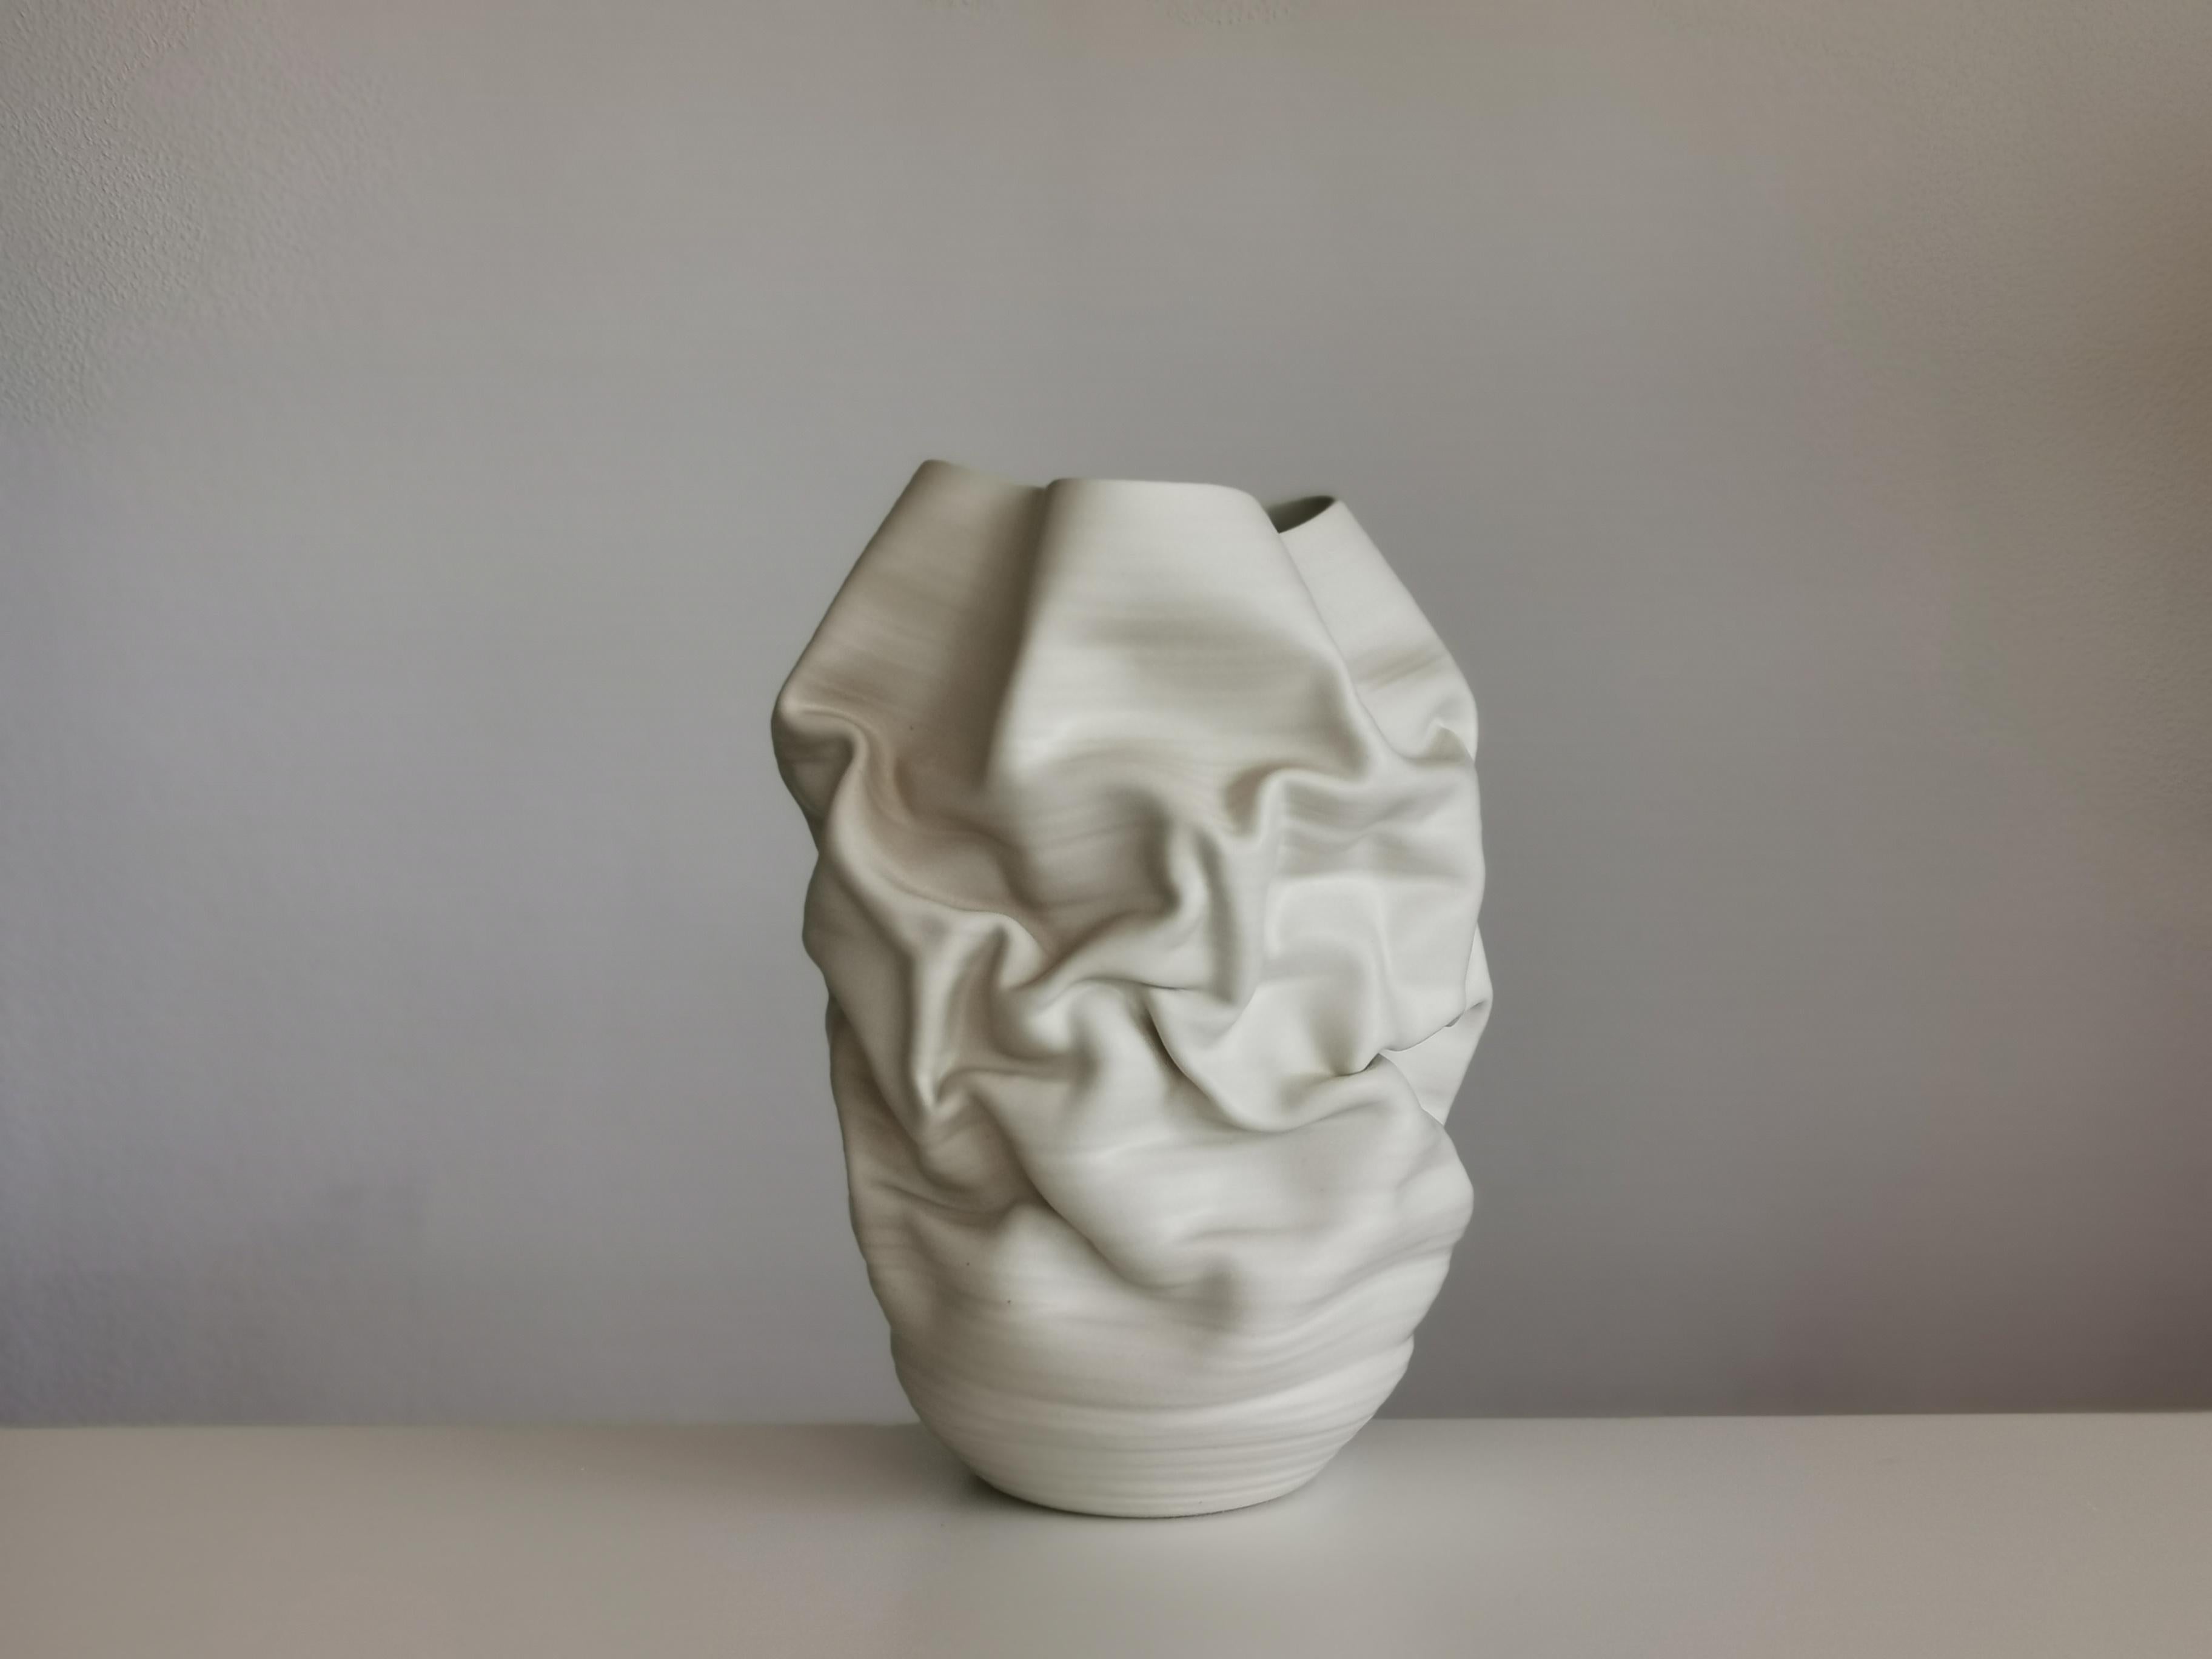 Organic Modern White Deflated Crumpled Form, Vase, Interior Sculpture or Vessel, Objet D'Art